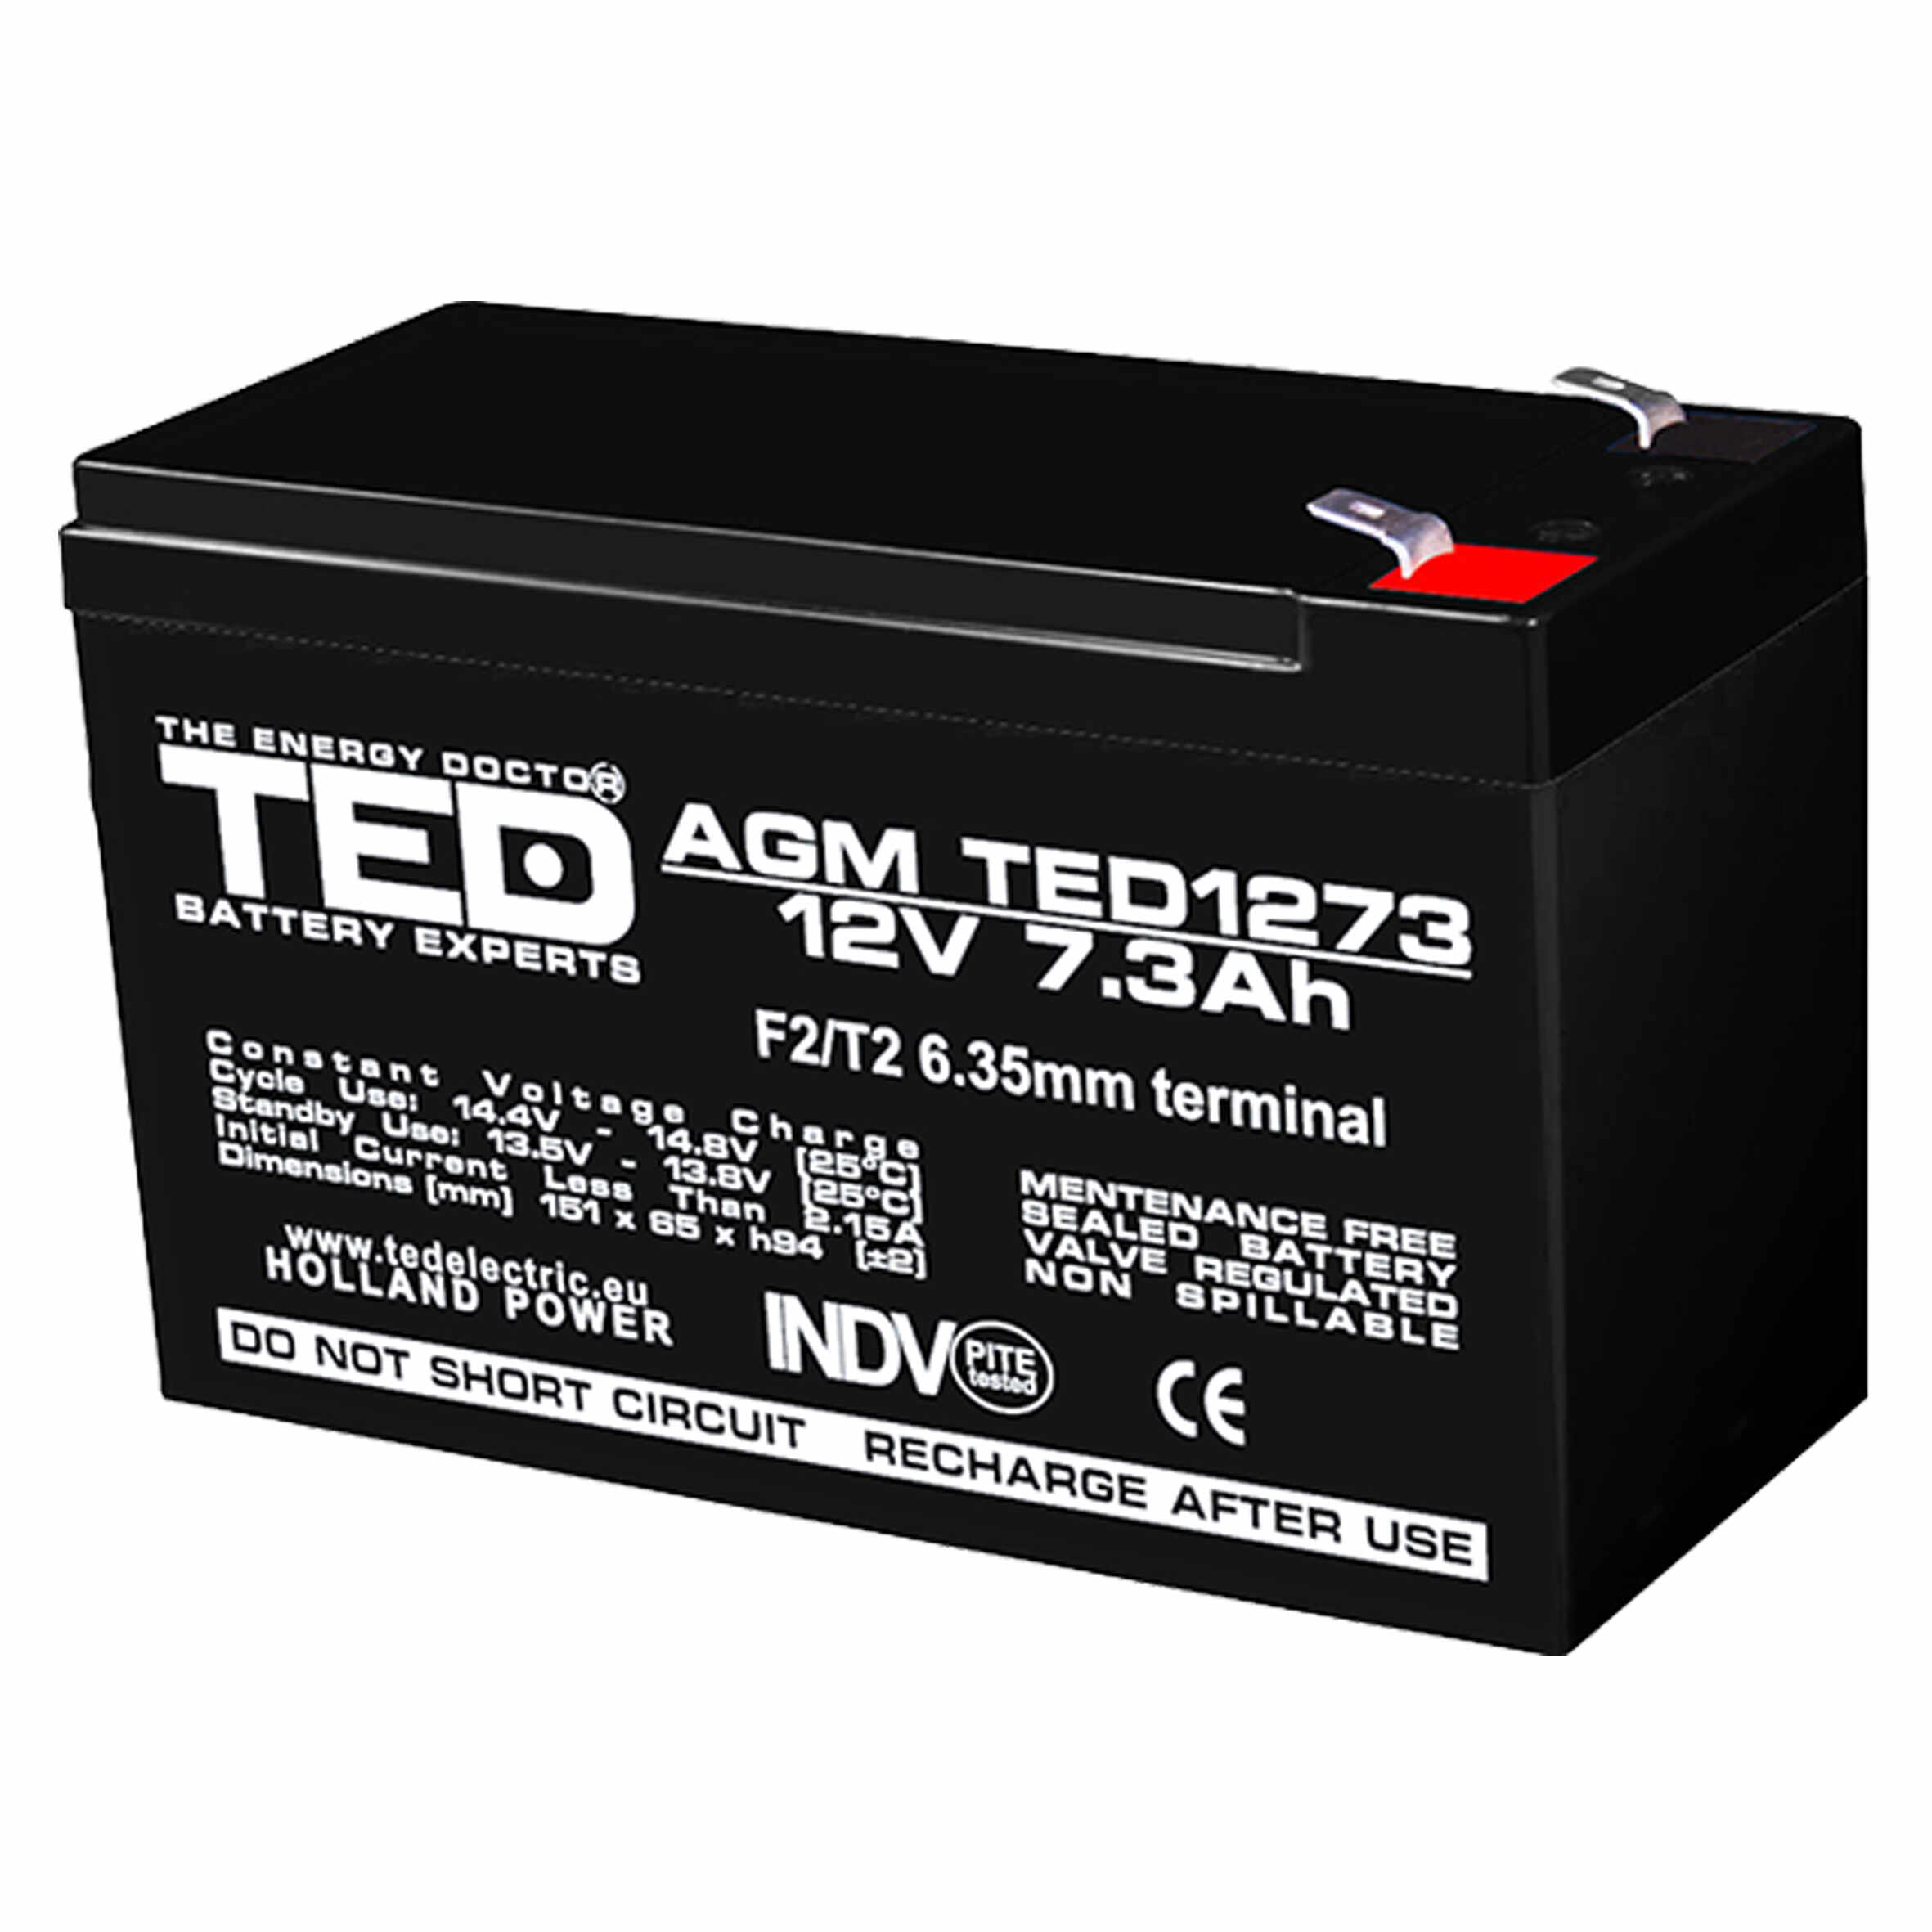 Acumulator AGM VRLA 12V 7,3A dimensiuni 151mm x 65mm x h 95mm F2 TED Battery Expert Holland TED003249 (5)